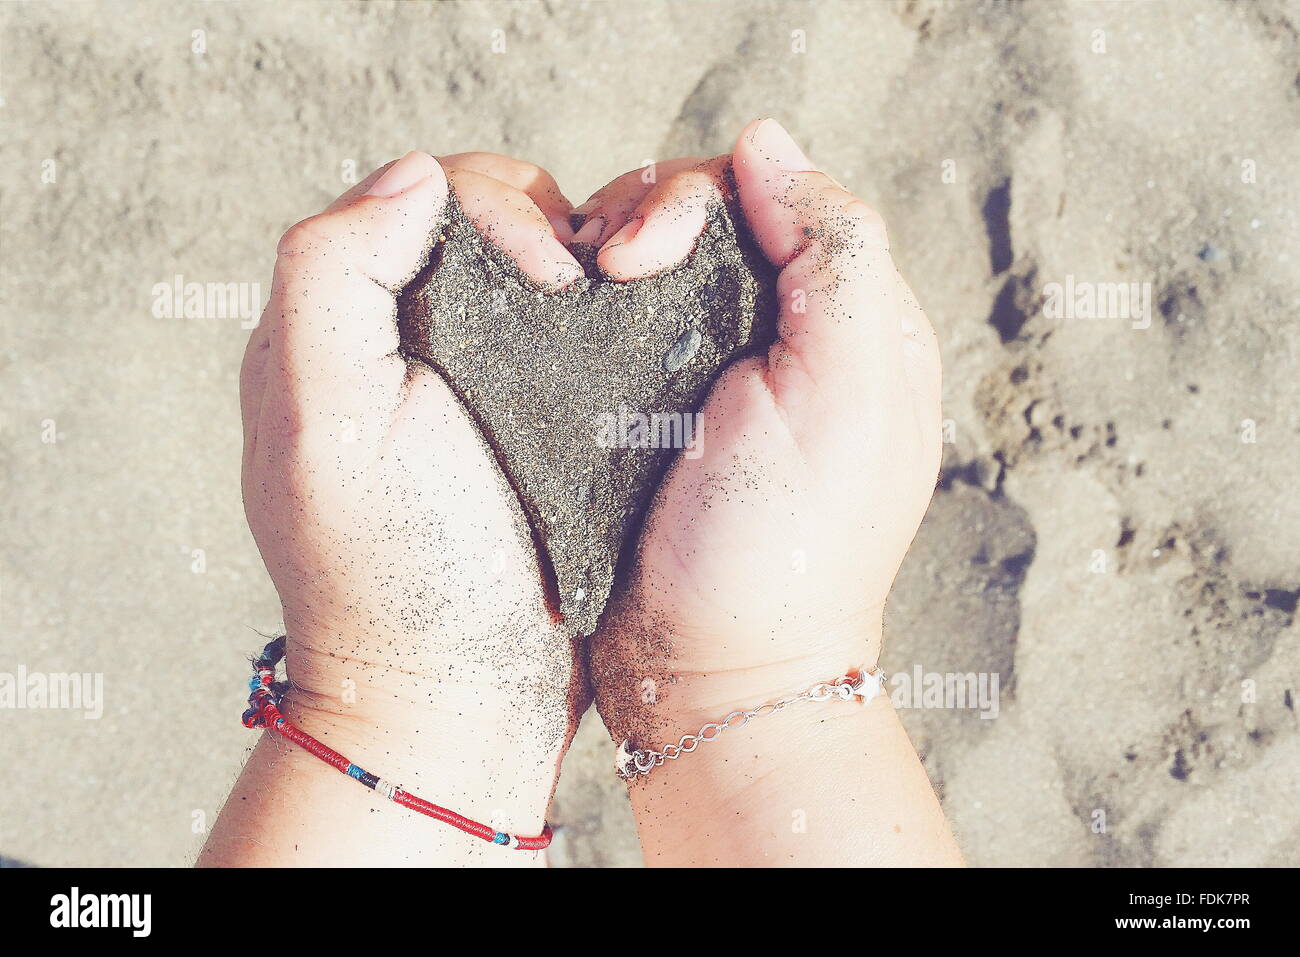 Hands holding sand en forme de coeur Banque D'Images